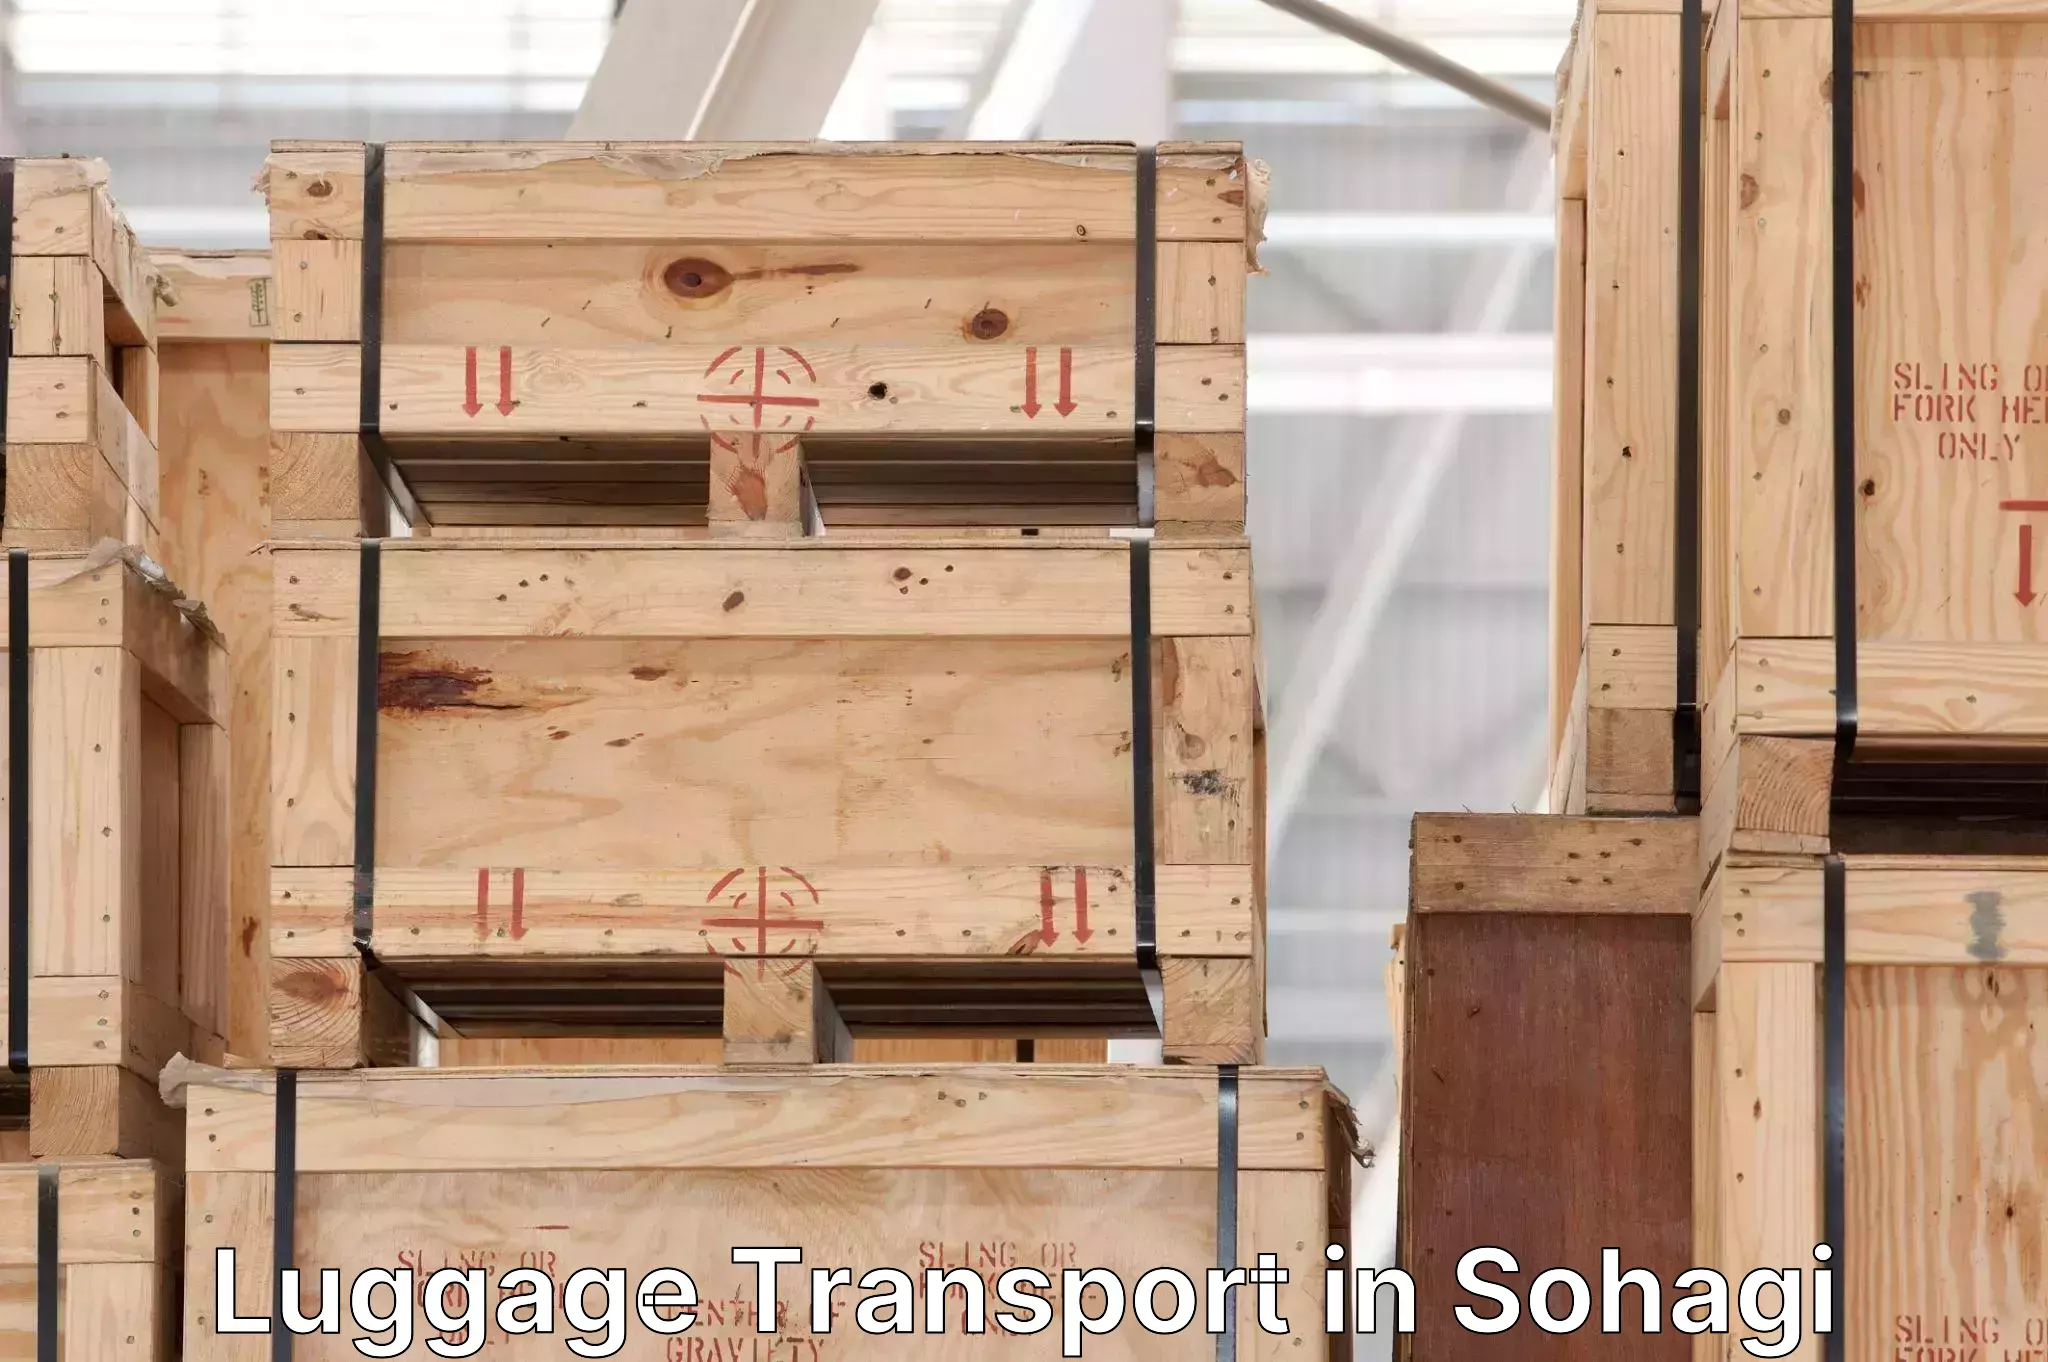 Corporate baggage transport in Sohagi